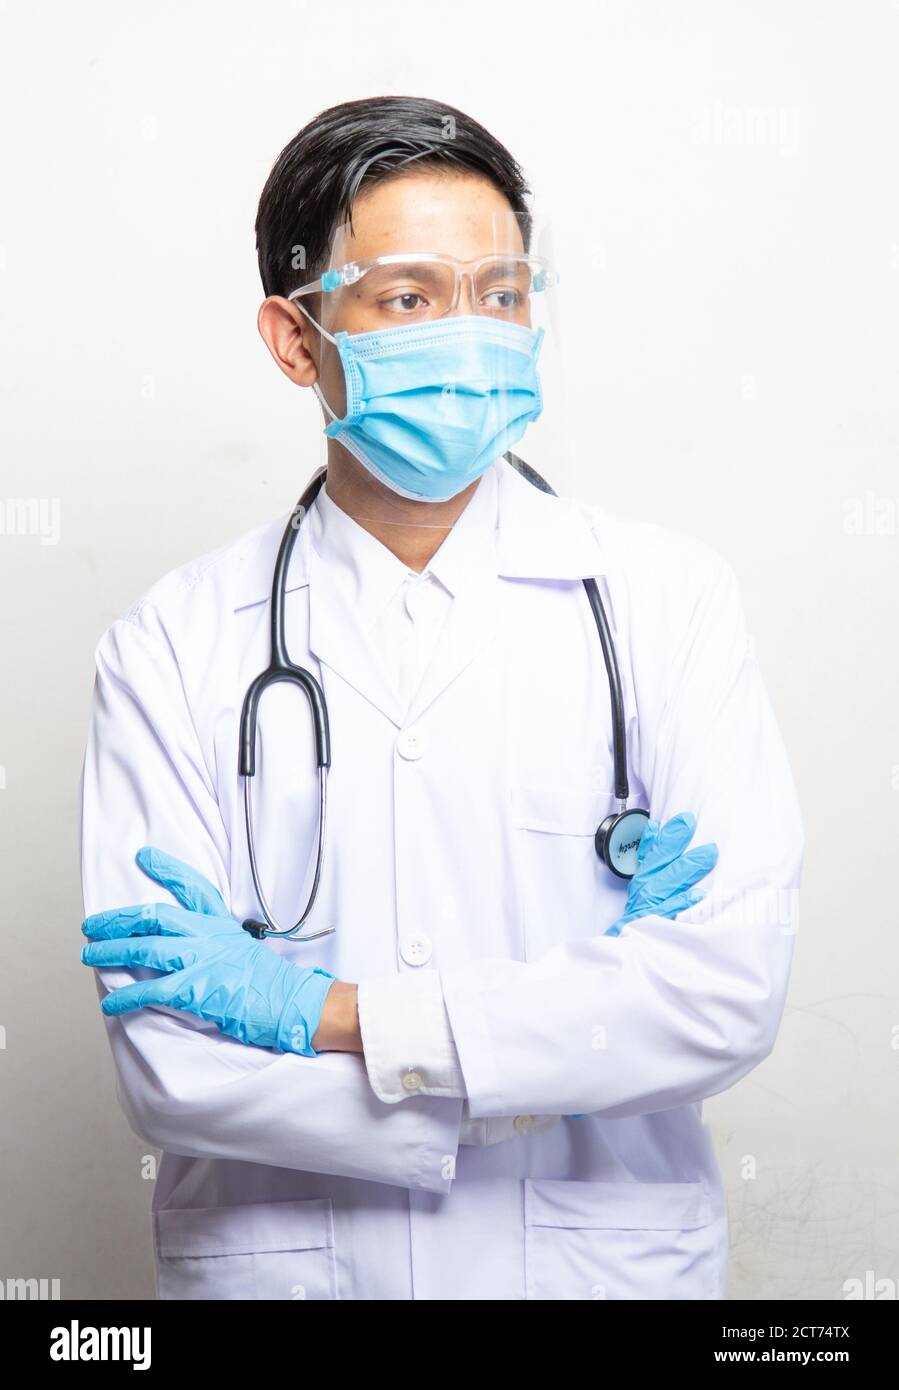 Doctor Man on blur hospital laboratory panoramic blue background. COVID-19 virus epidemic outbreak to Coronavirus pandemic disease global recession wi Stock Photo